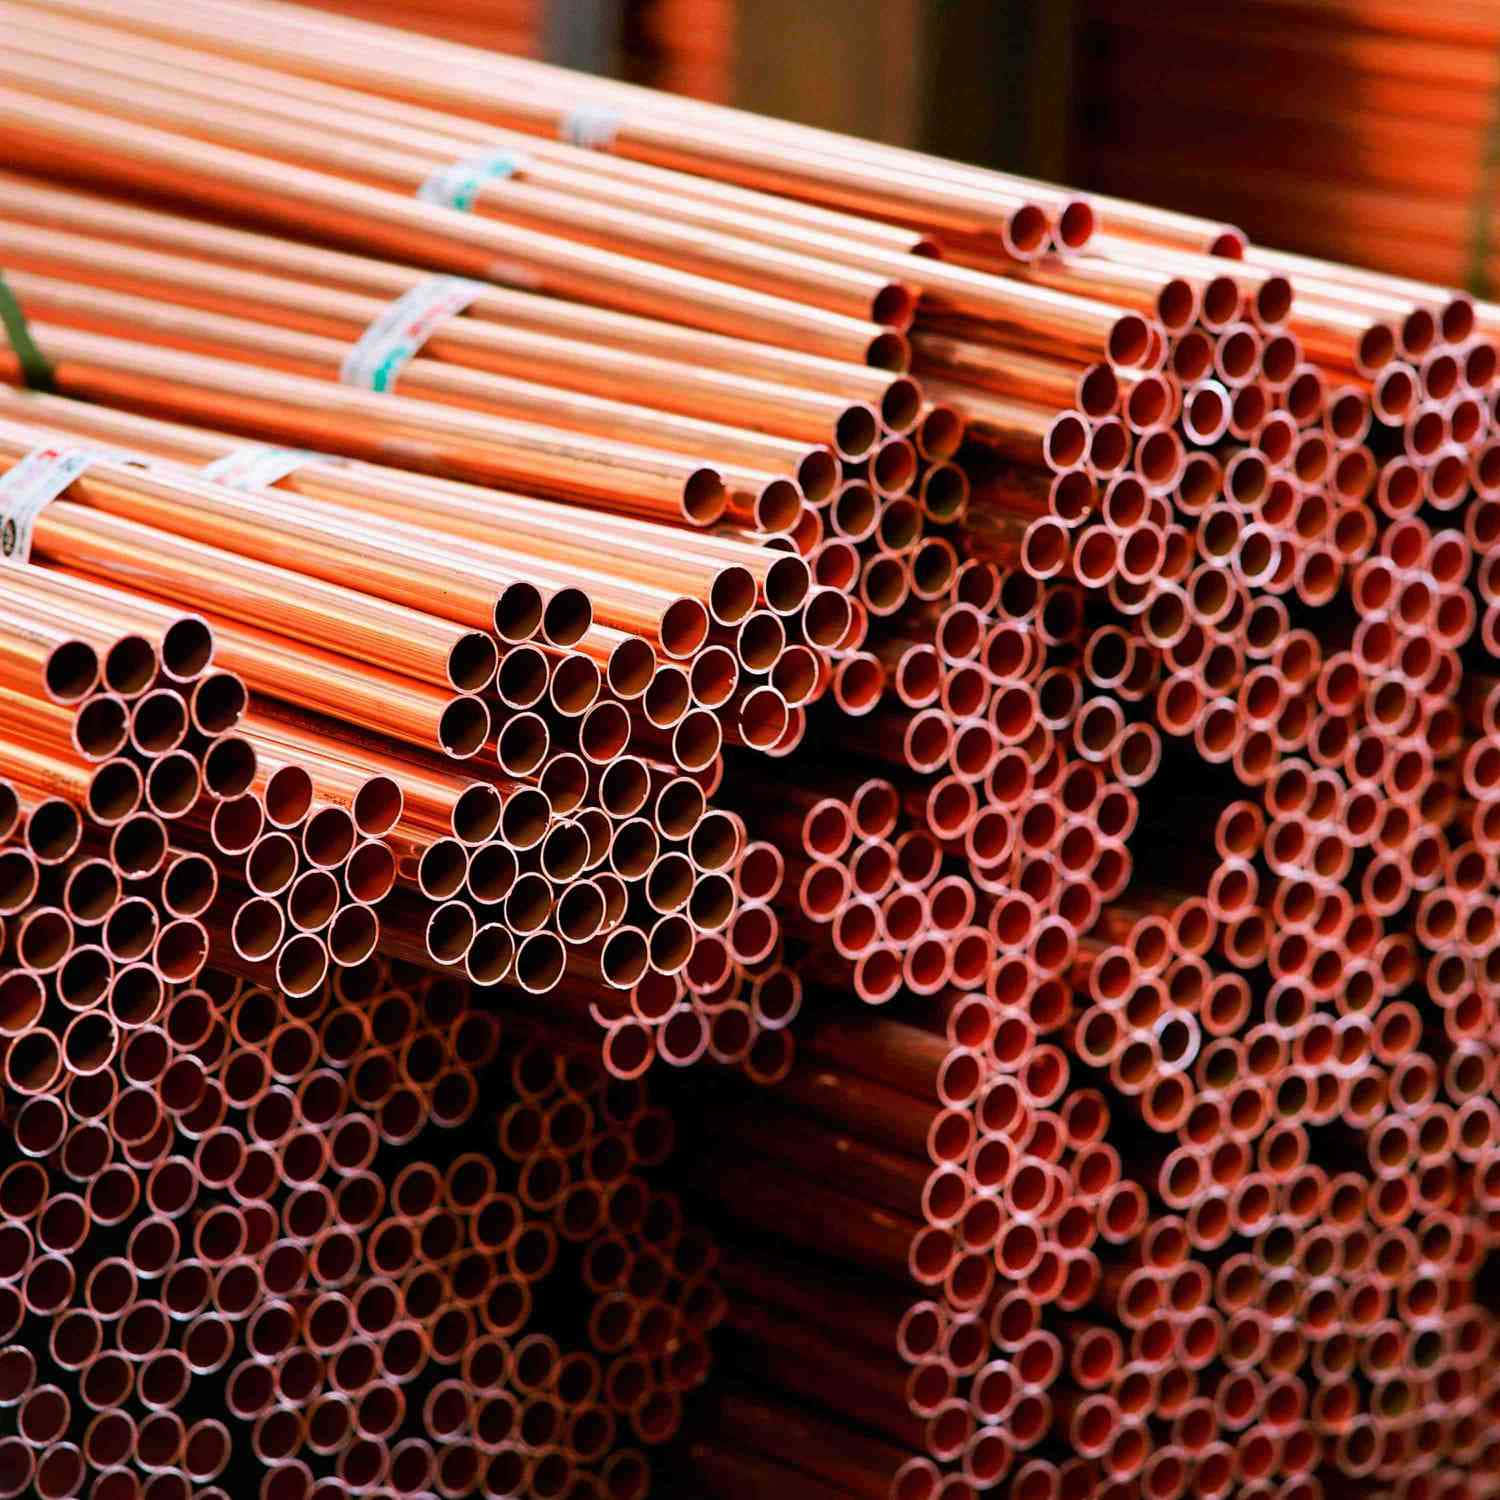 Copper Pipes Stockpile Wallpaper